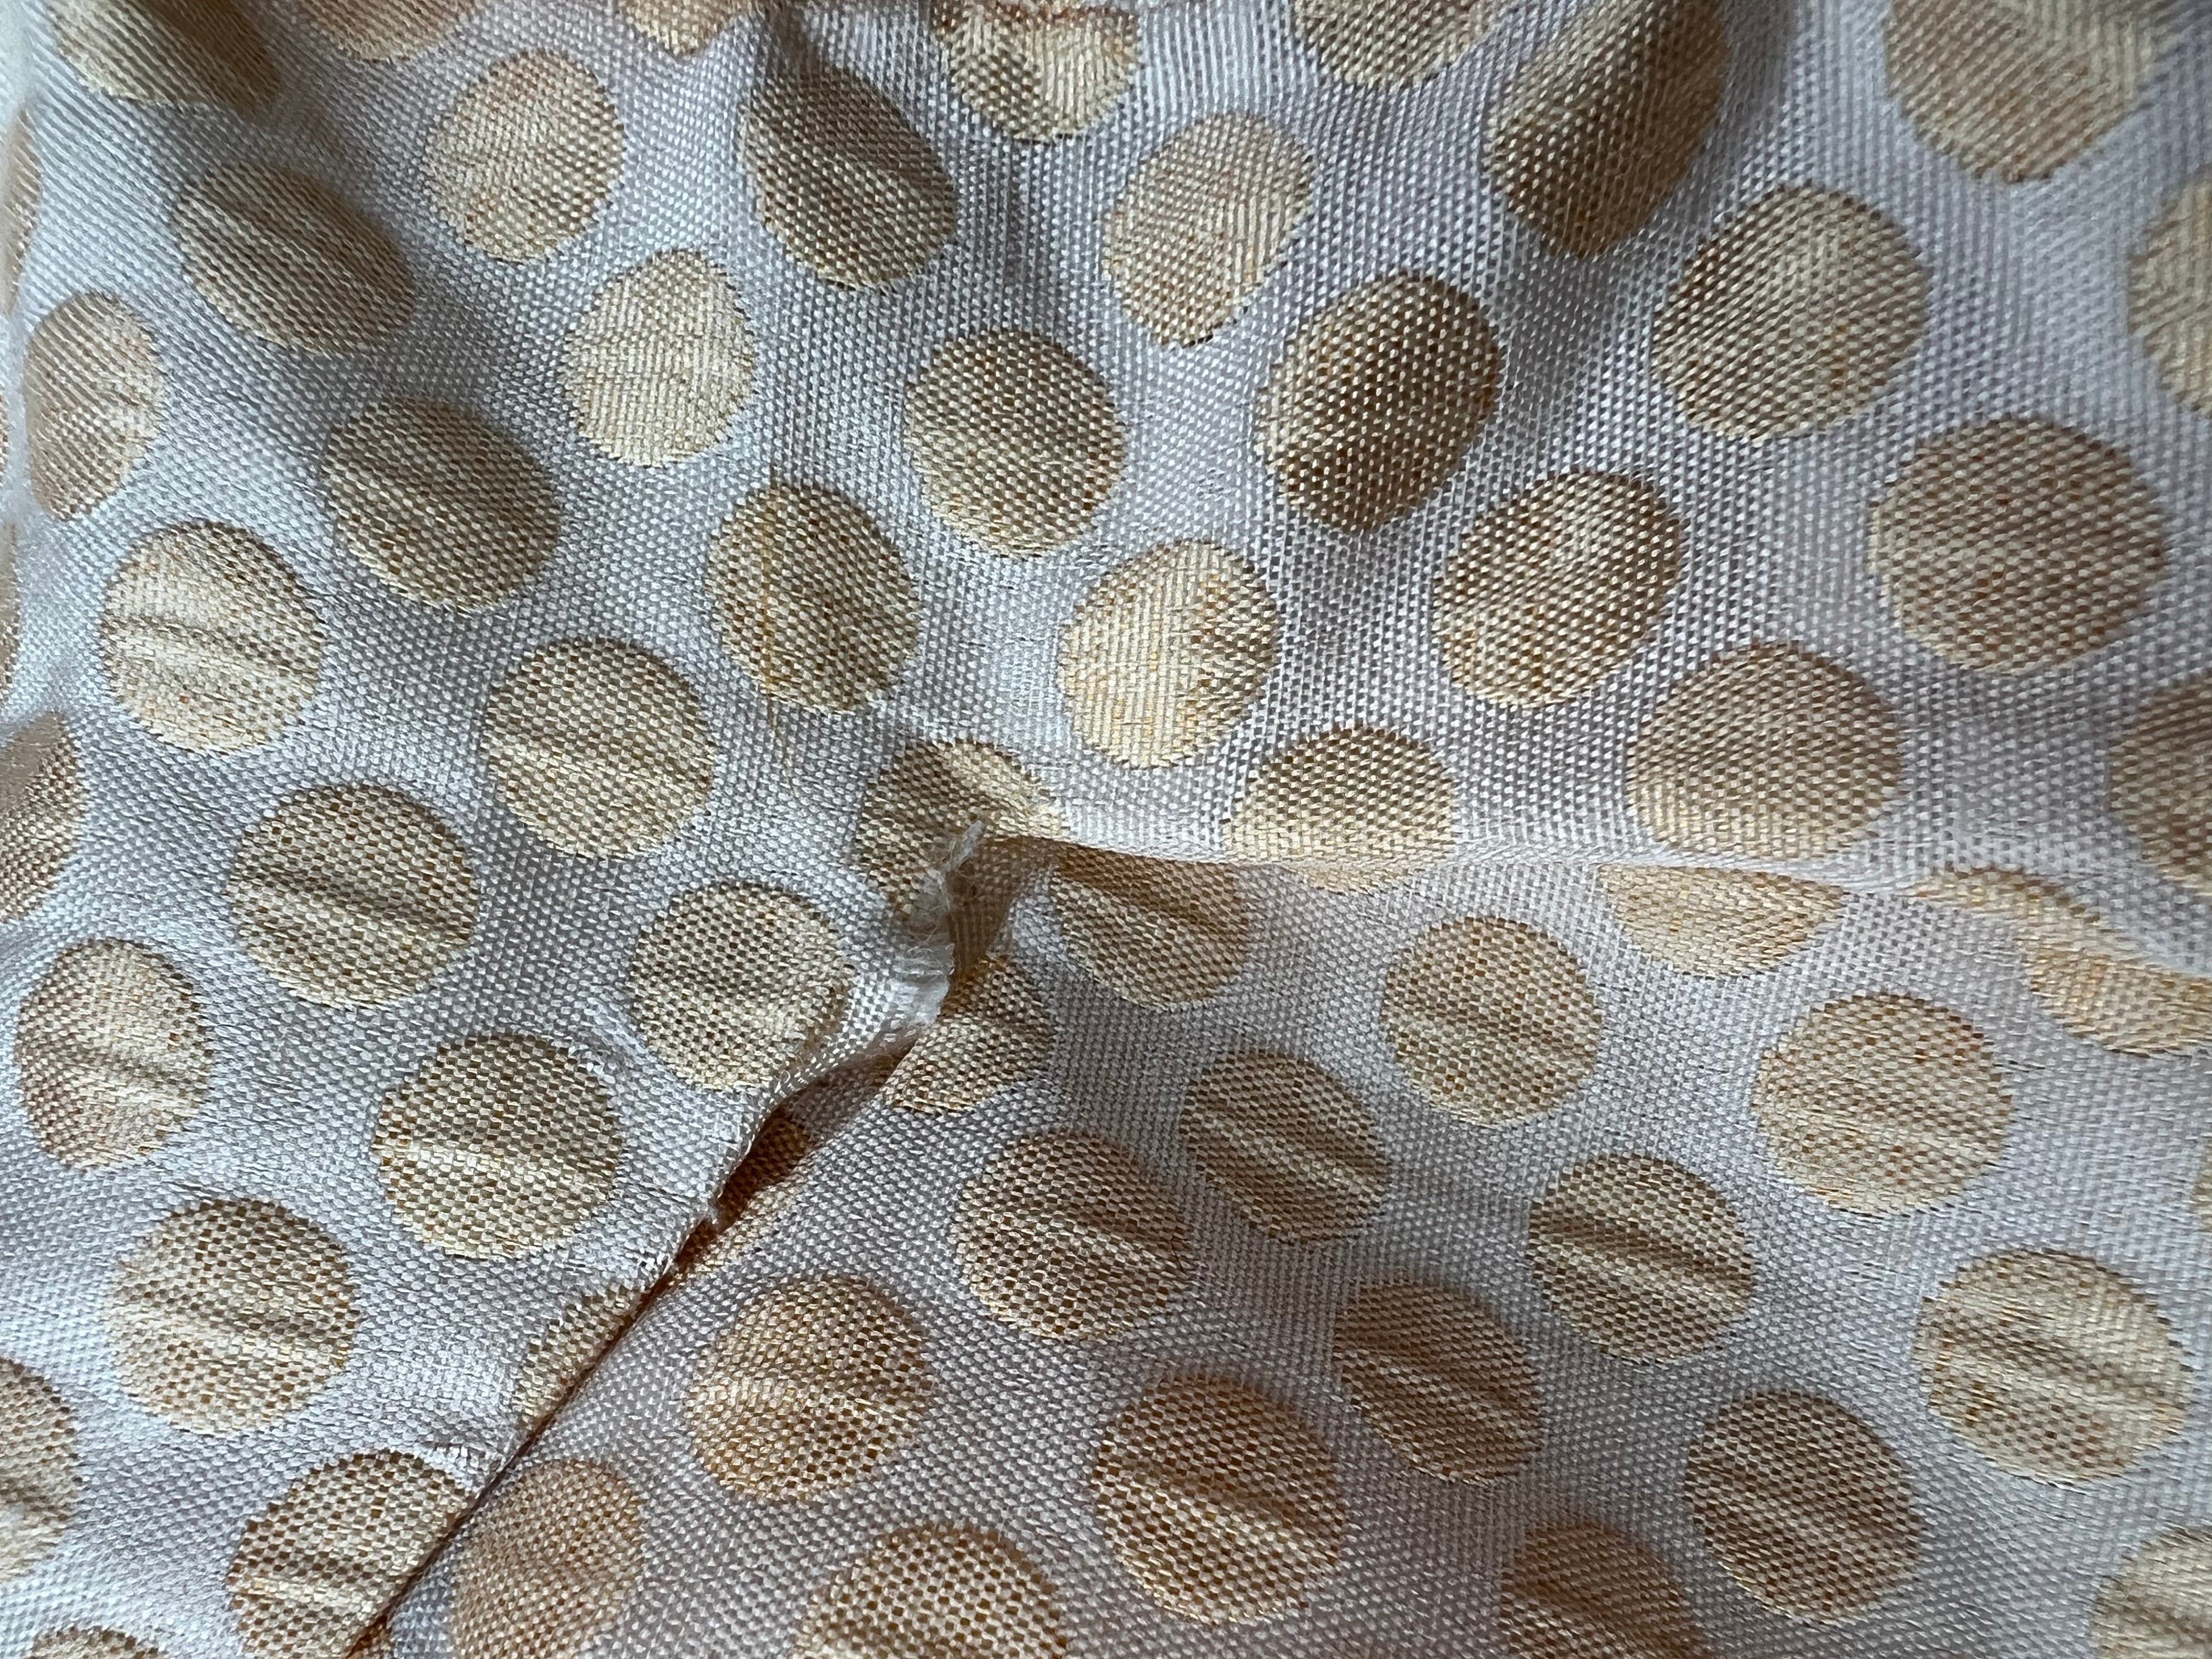 Gold polka dot shortsleeve dress small repair needed to seam